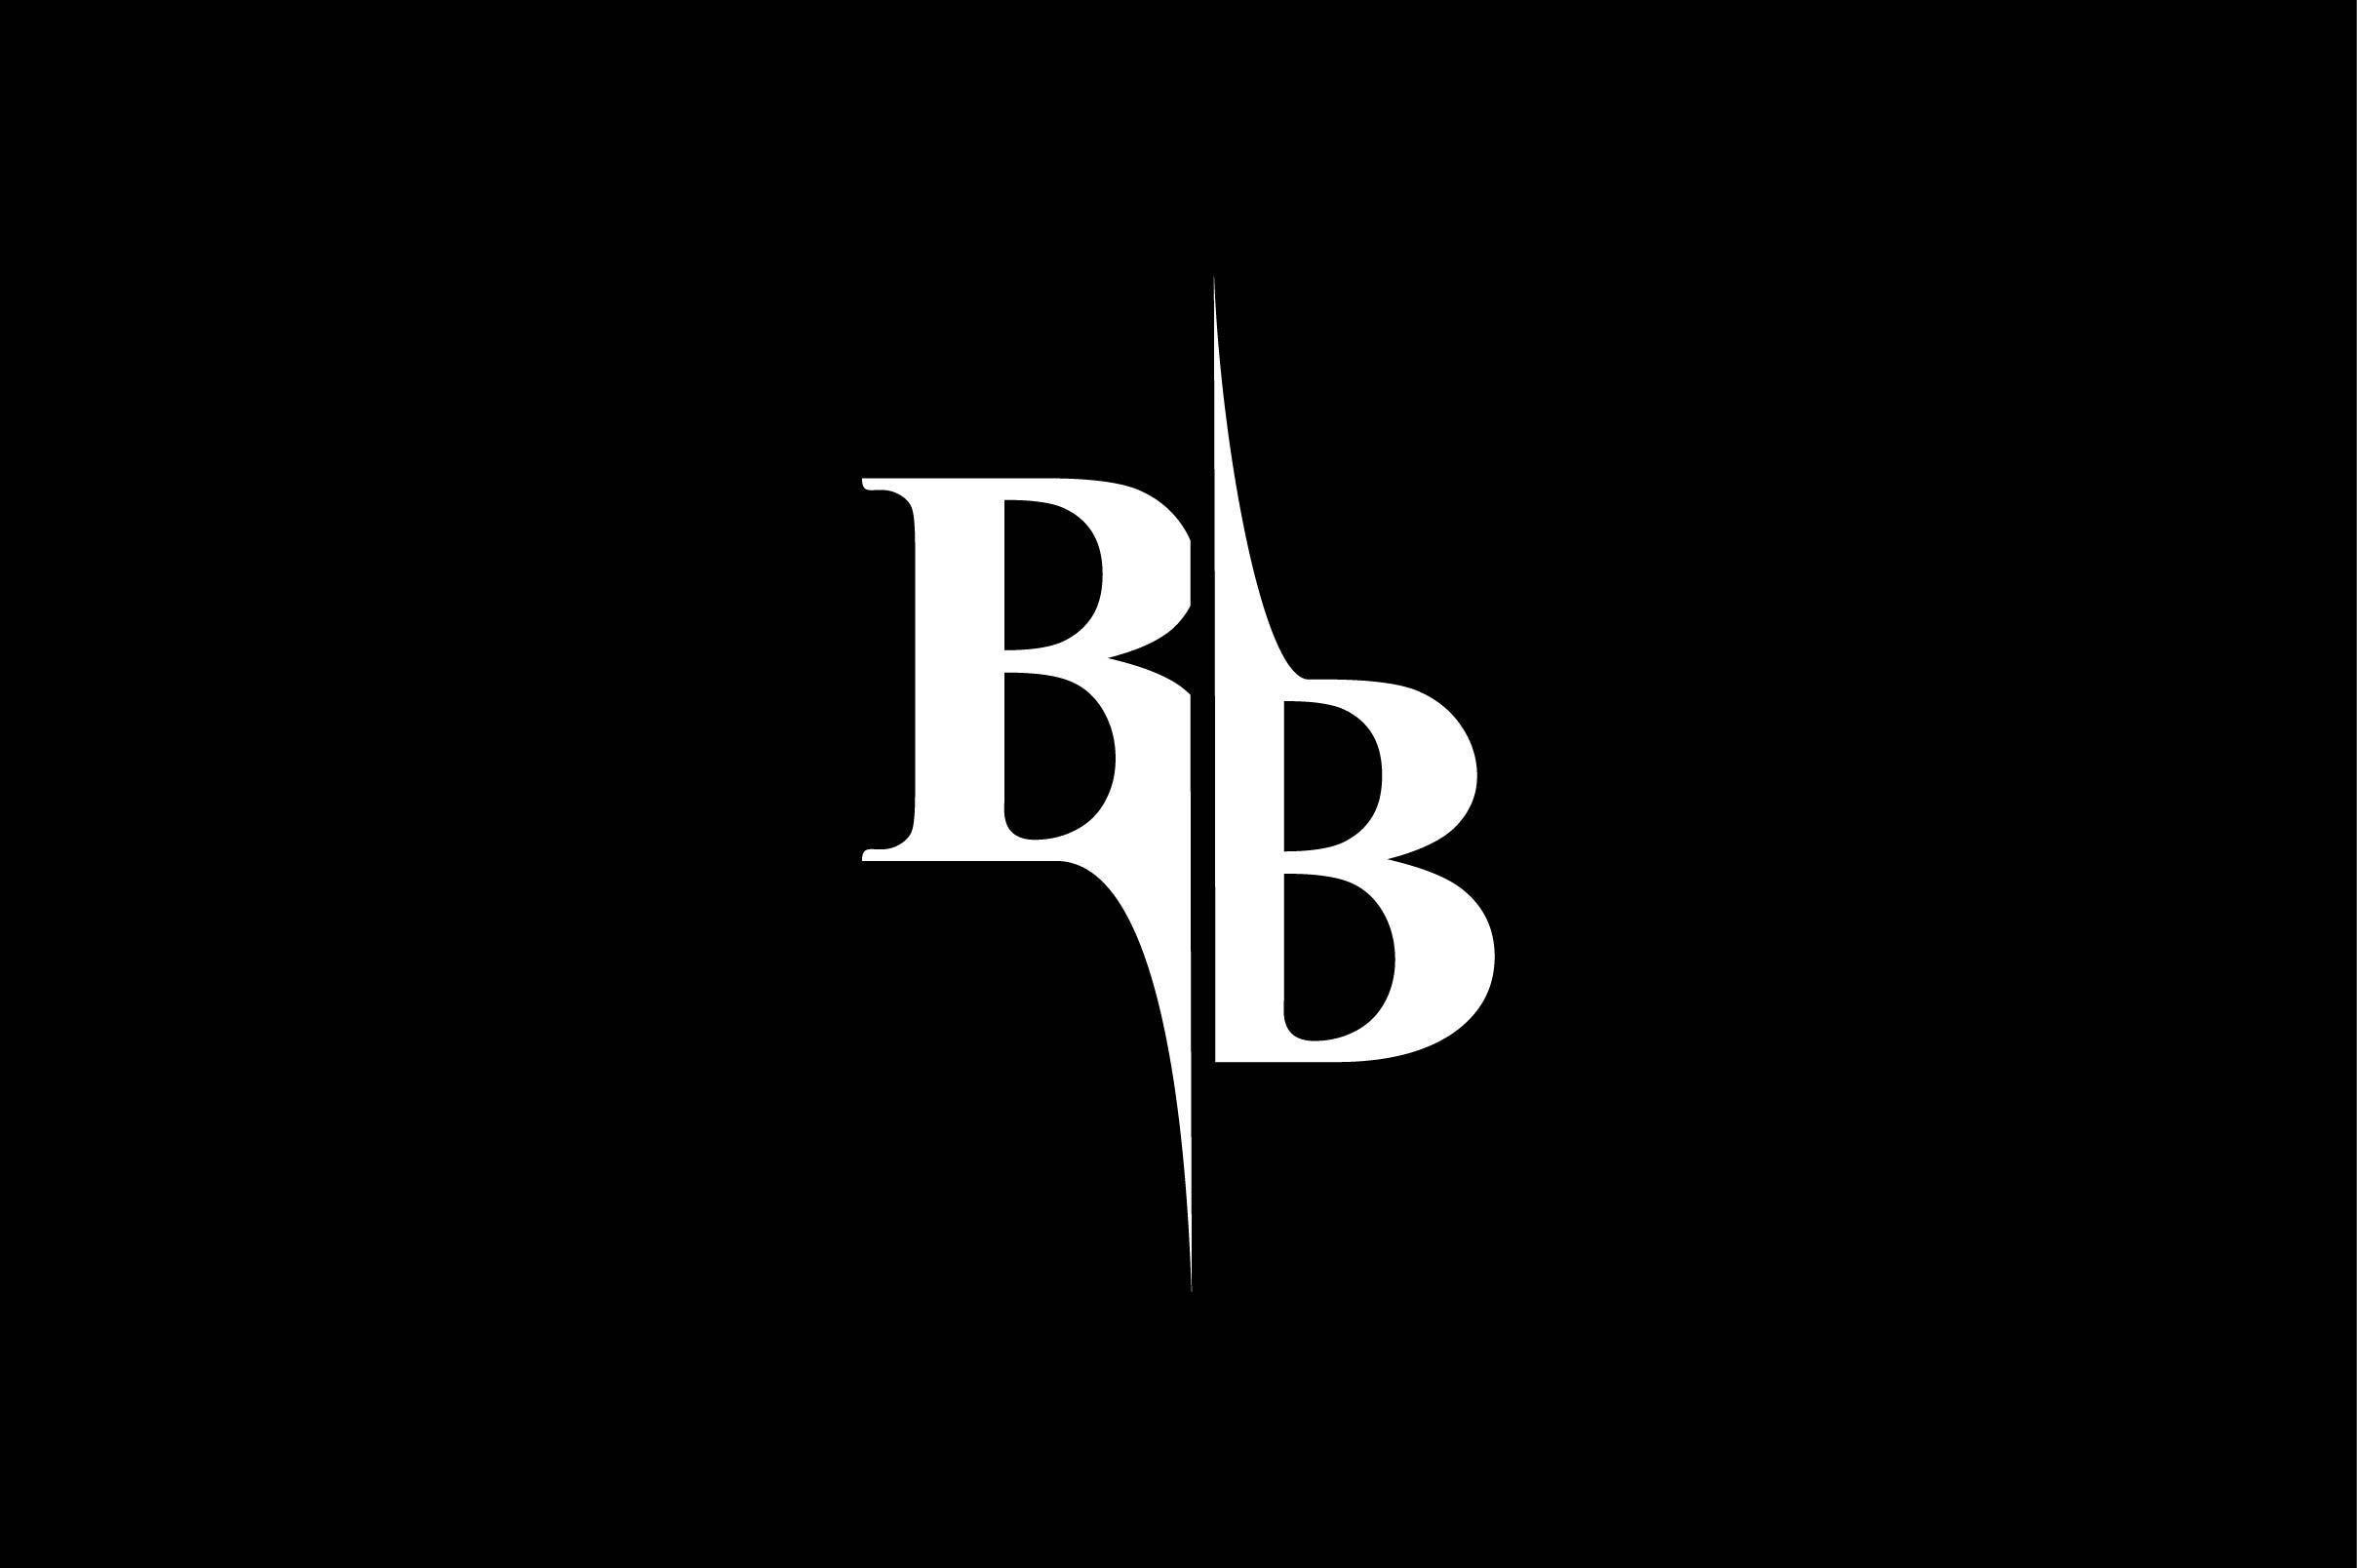 BB Monogram Logo V5 By Vectorseller